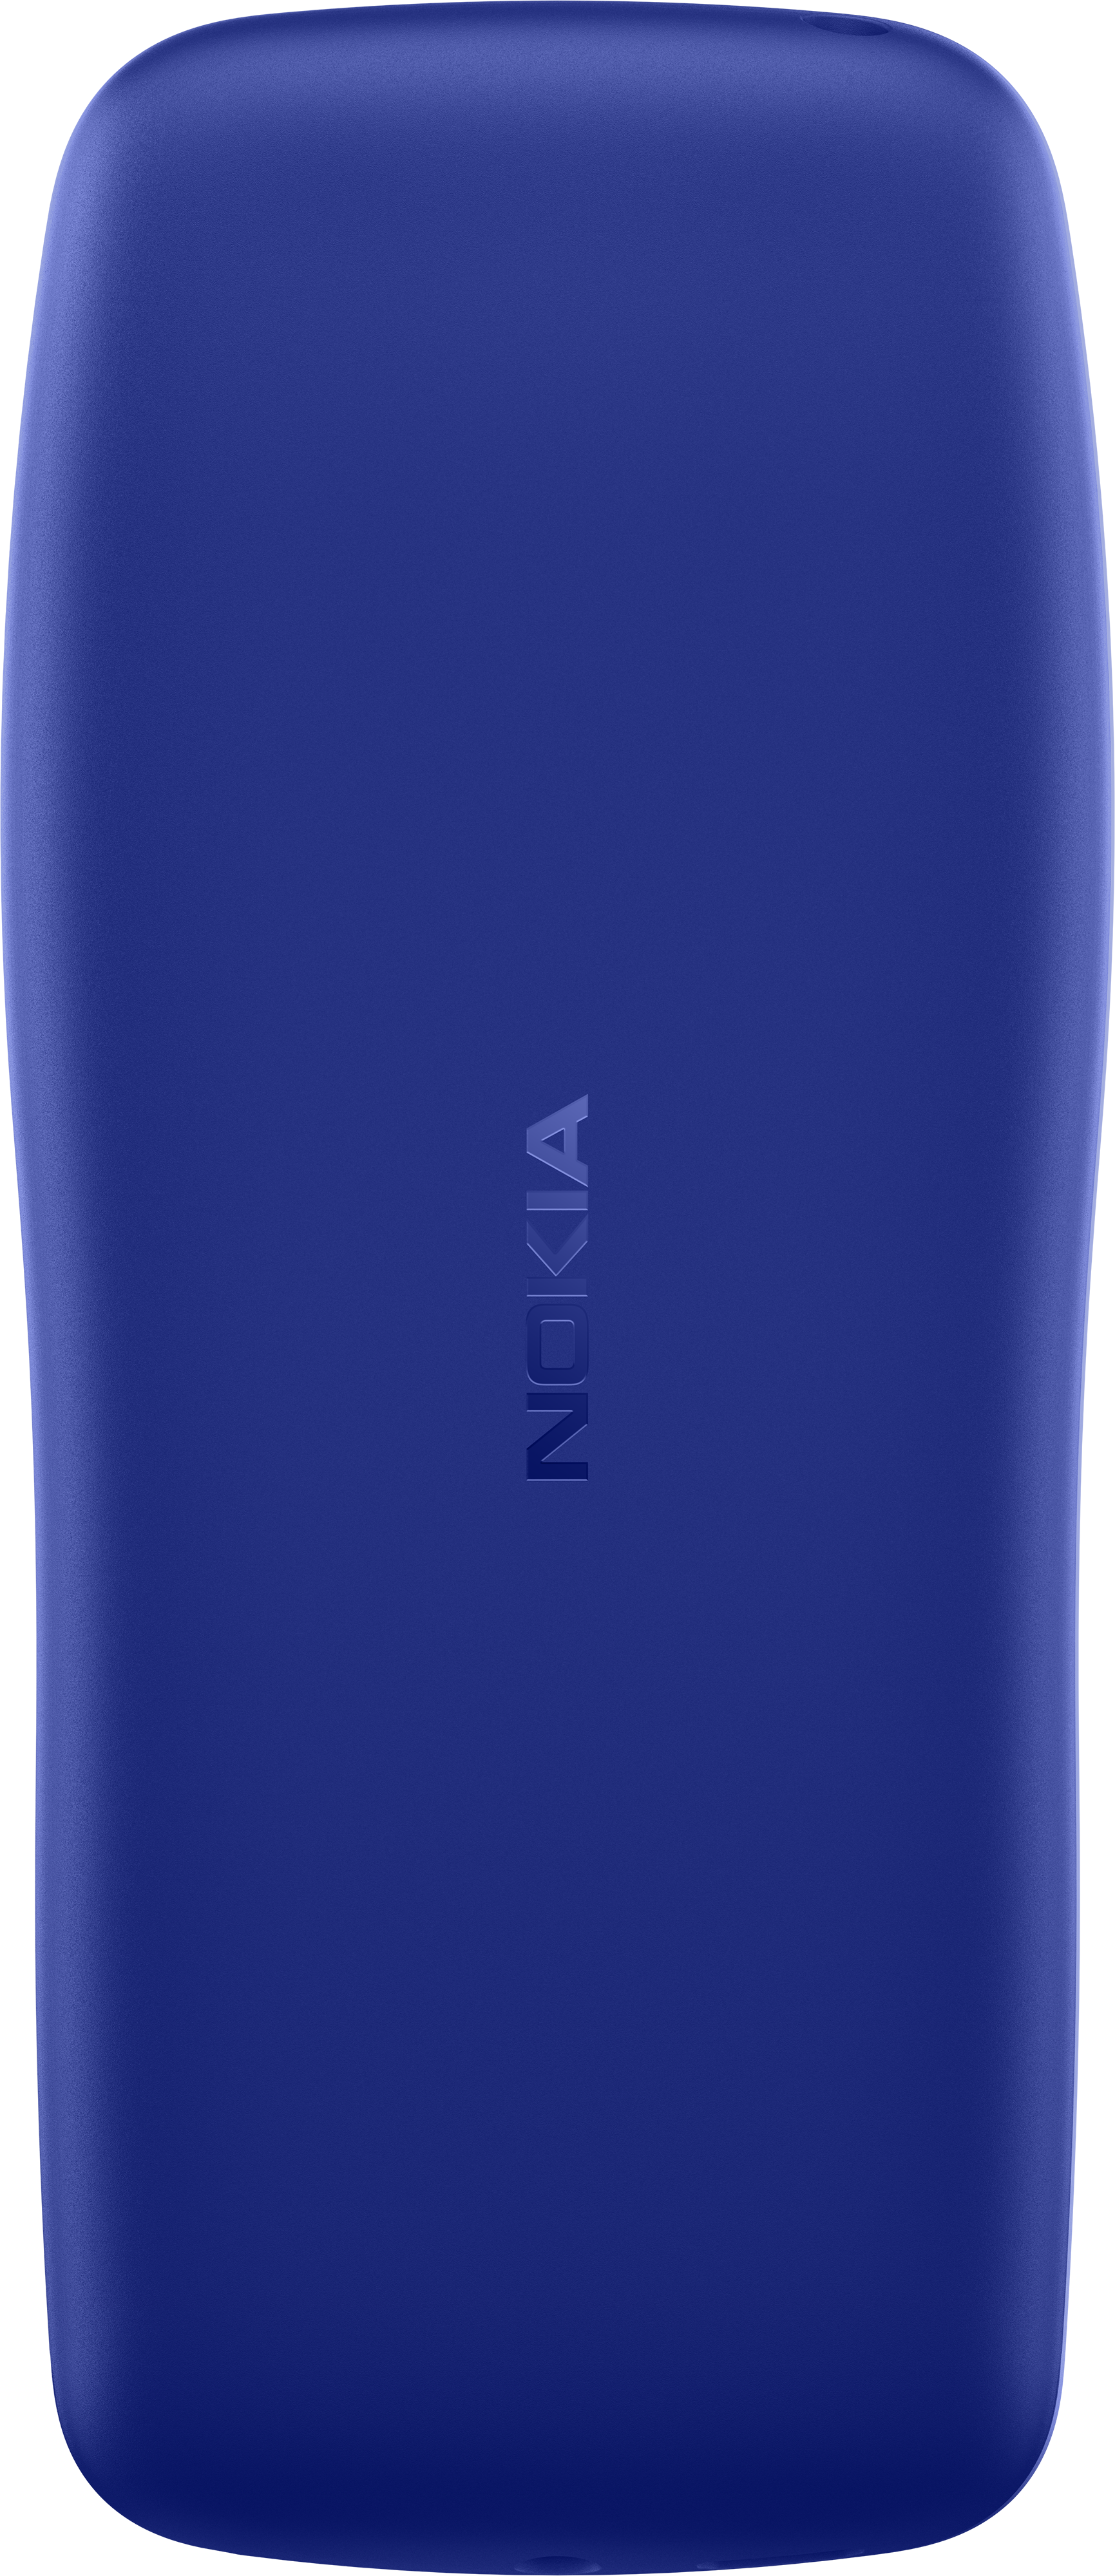 Nokia 105 Africa Edition Poatel